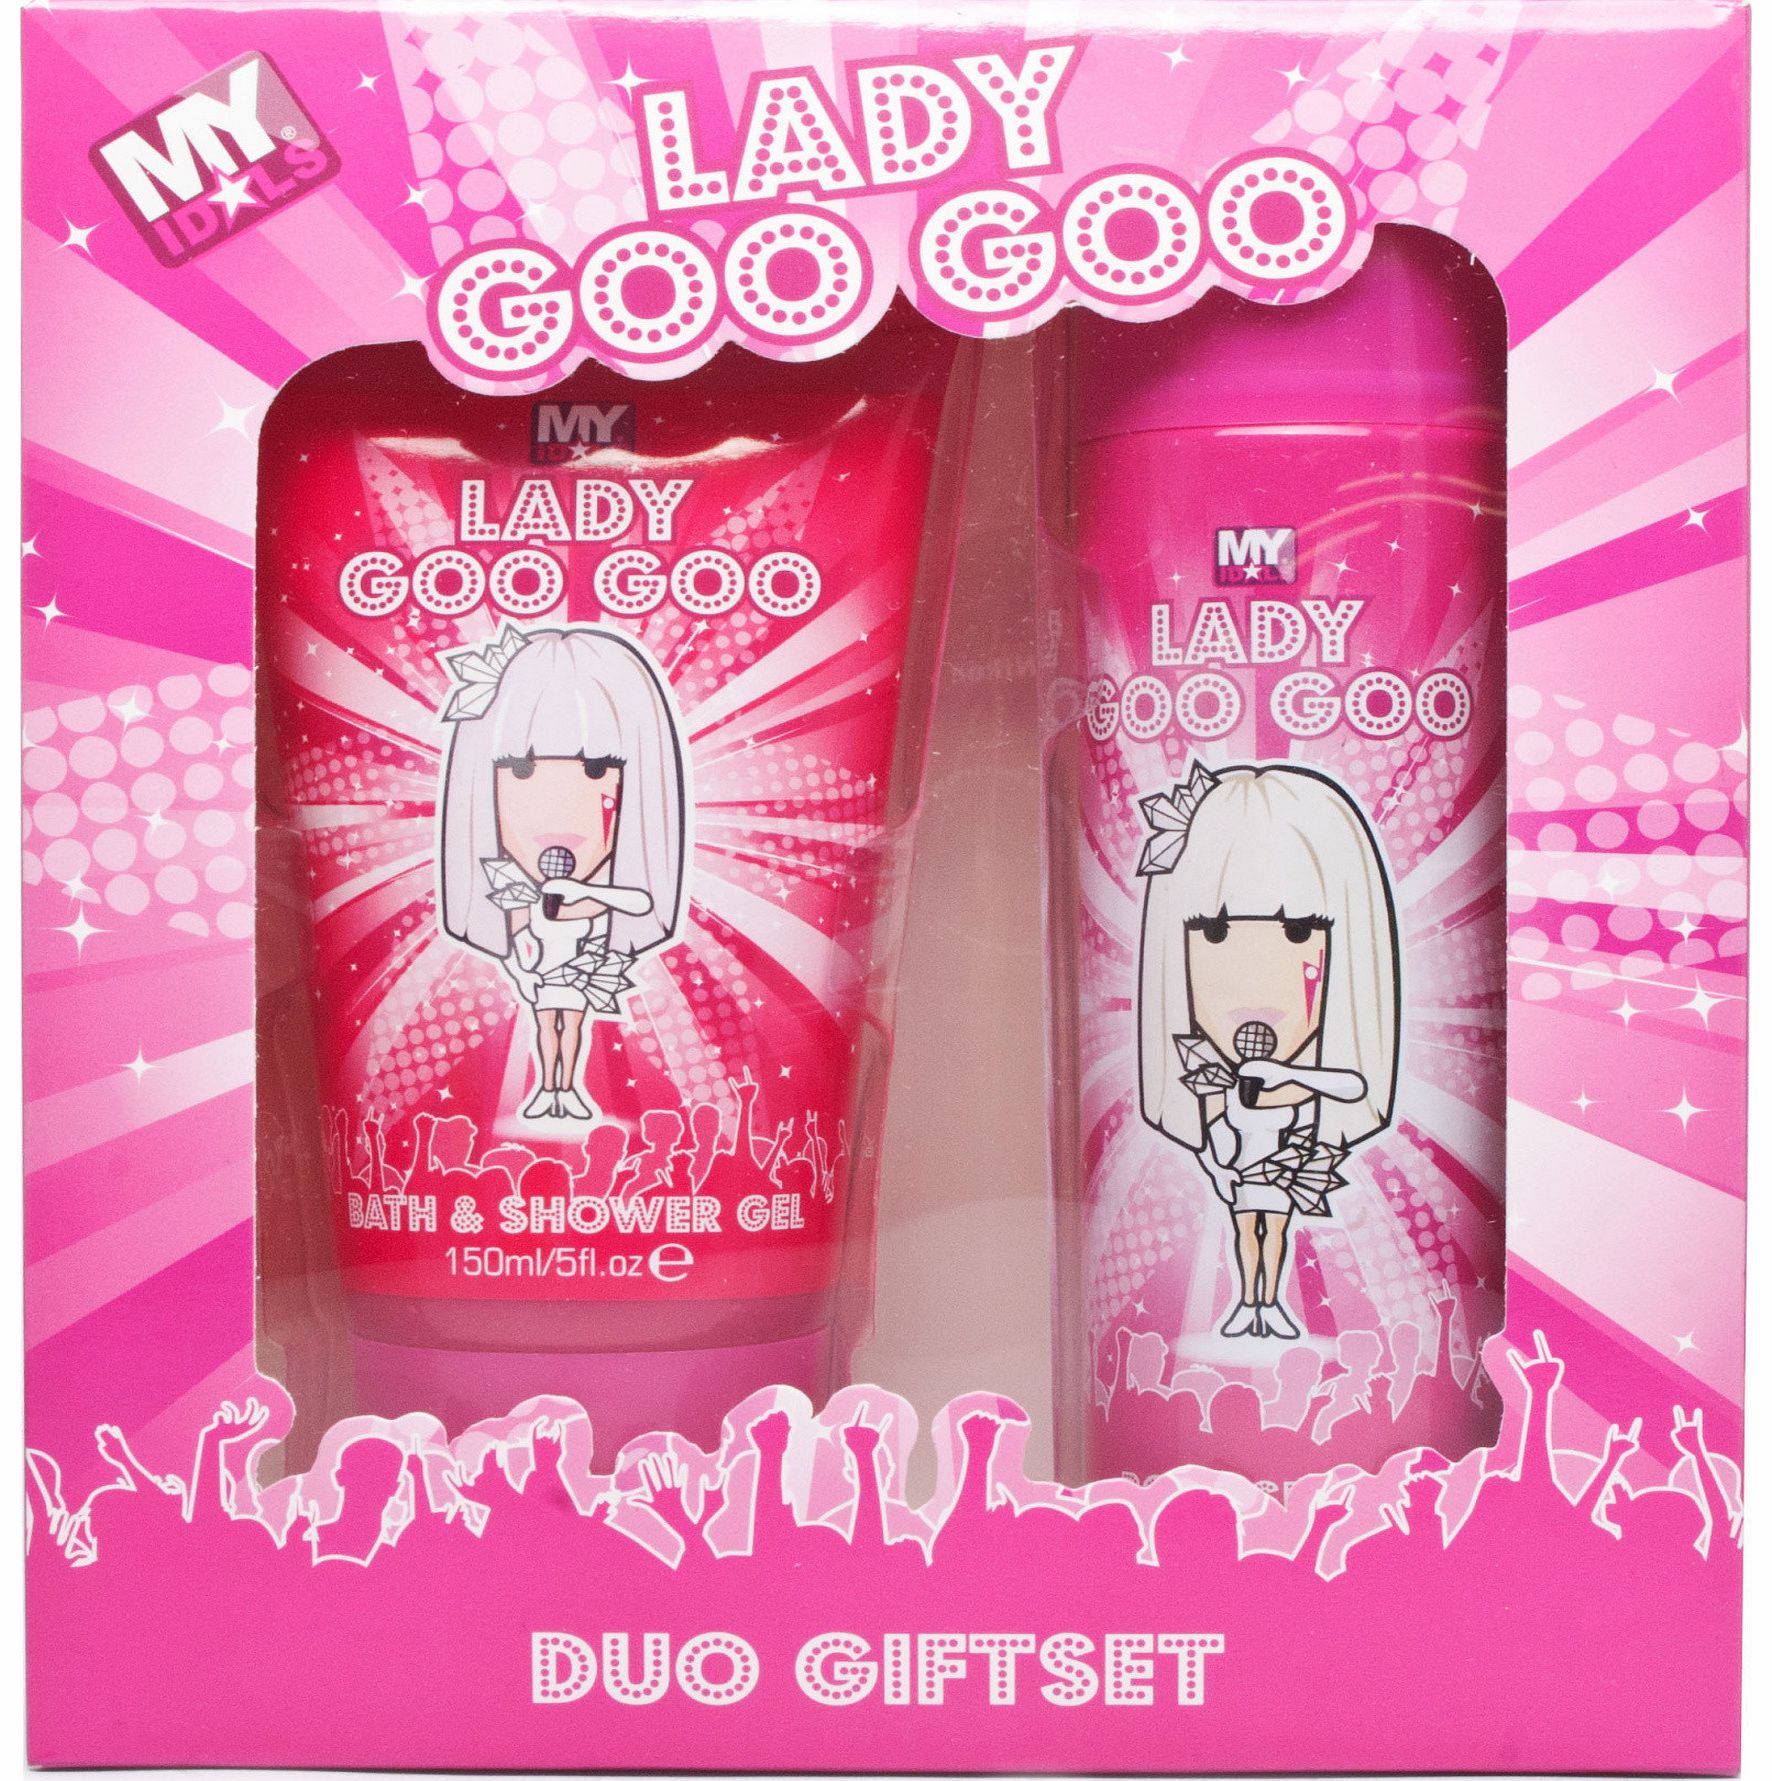 MY Idols Lady Goo Goo Duo Set